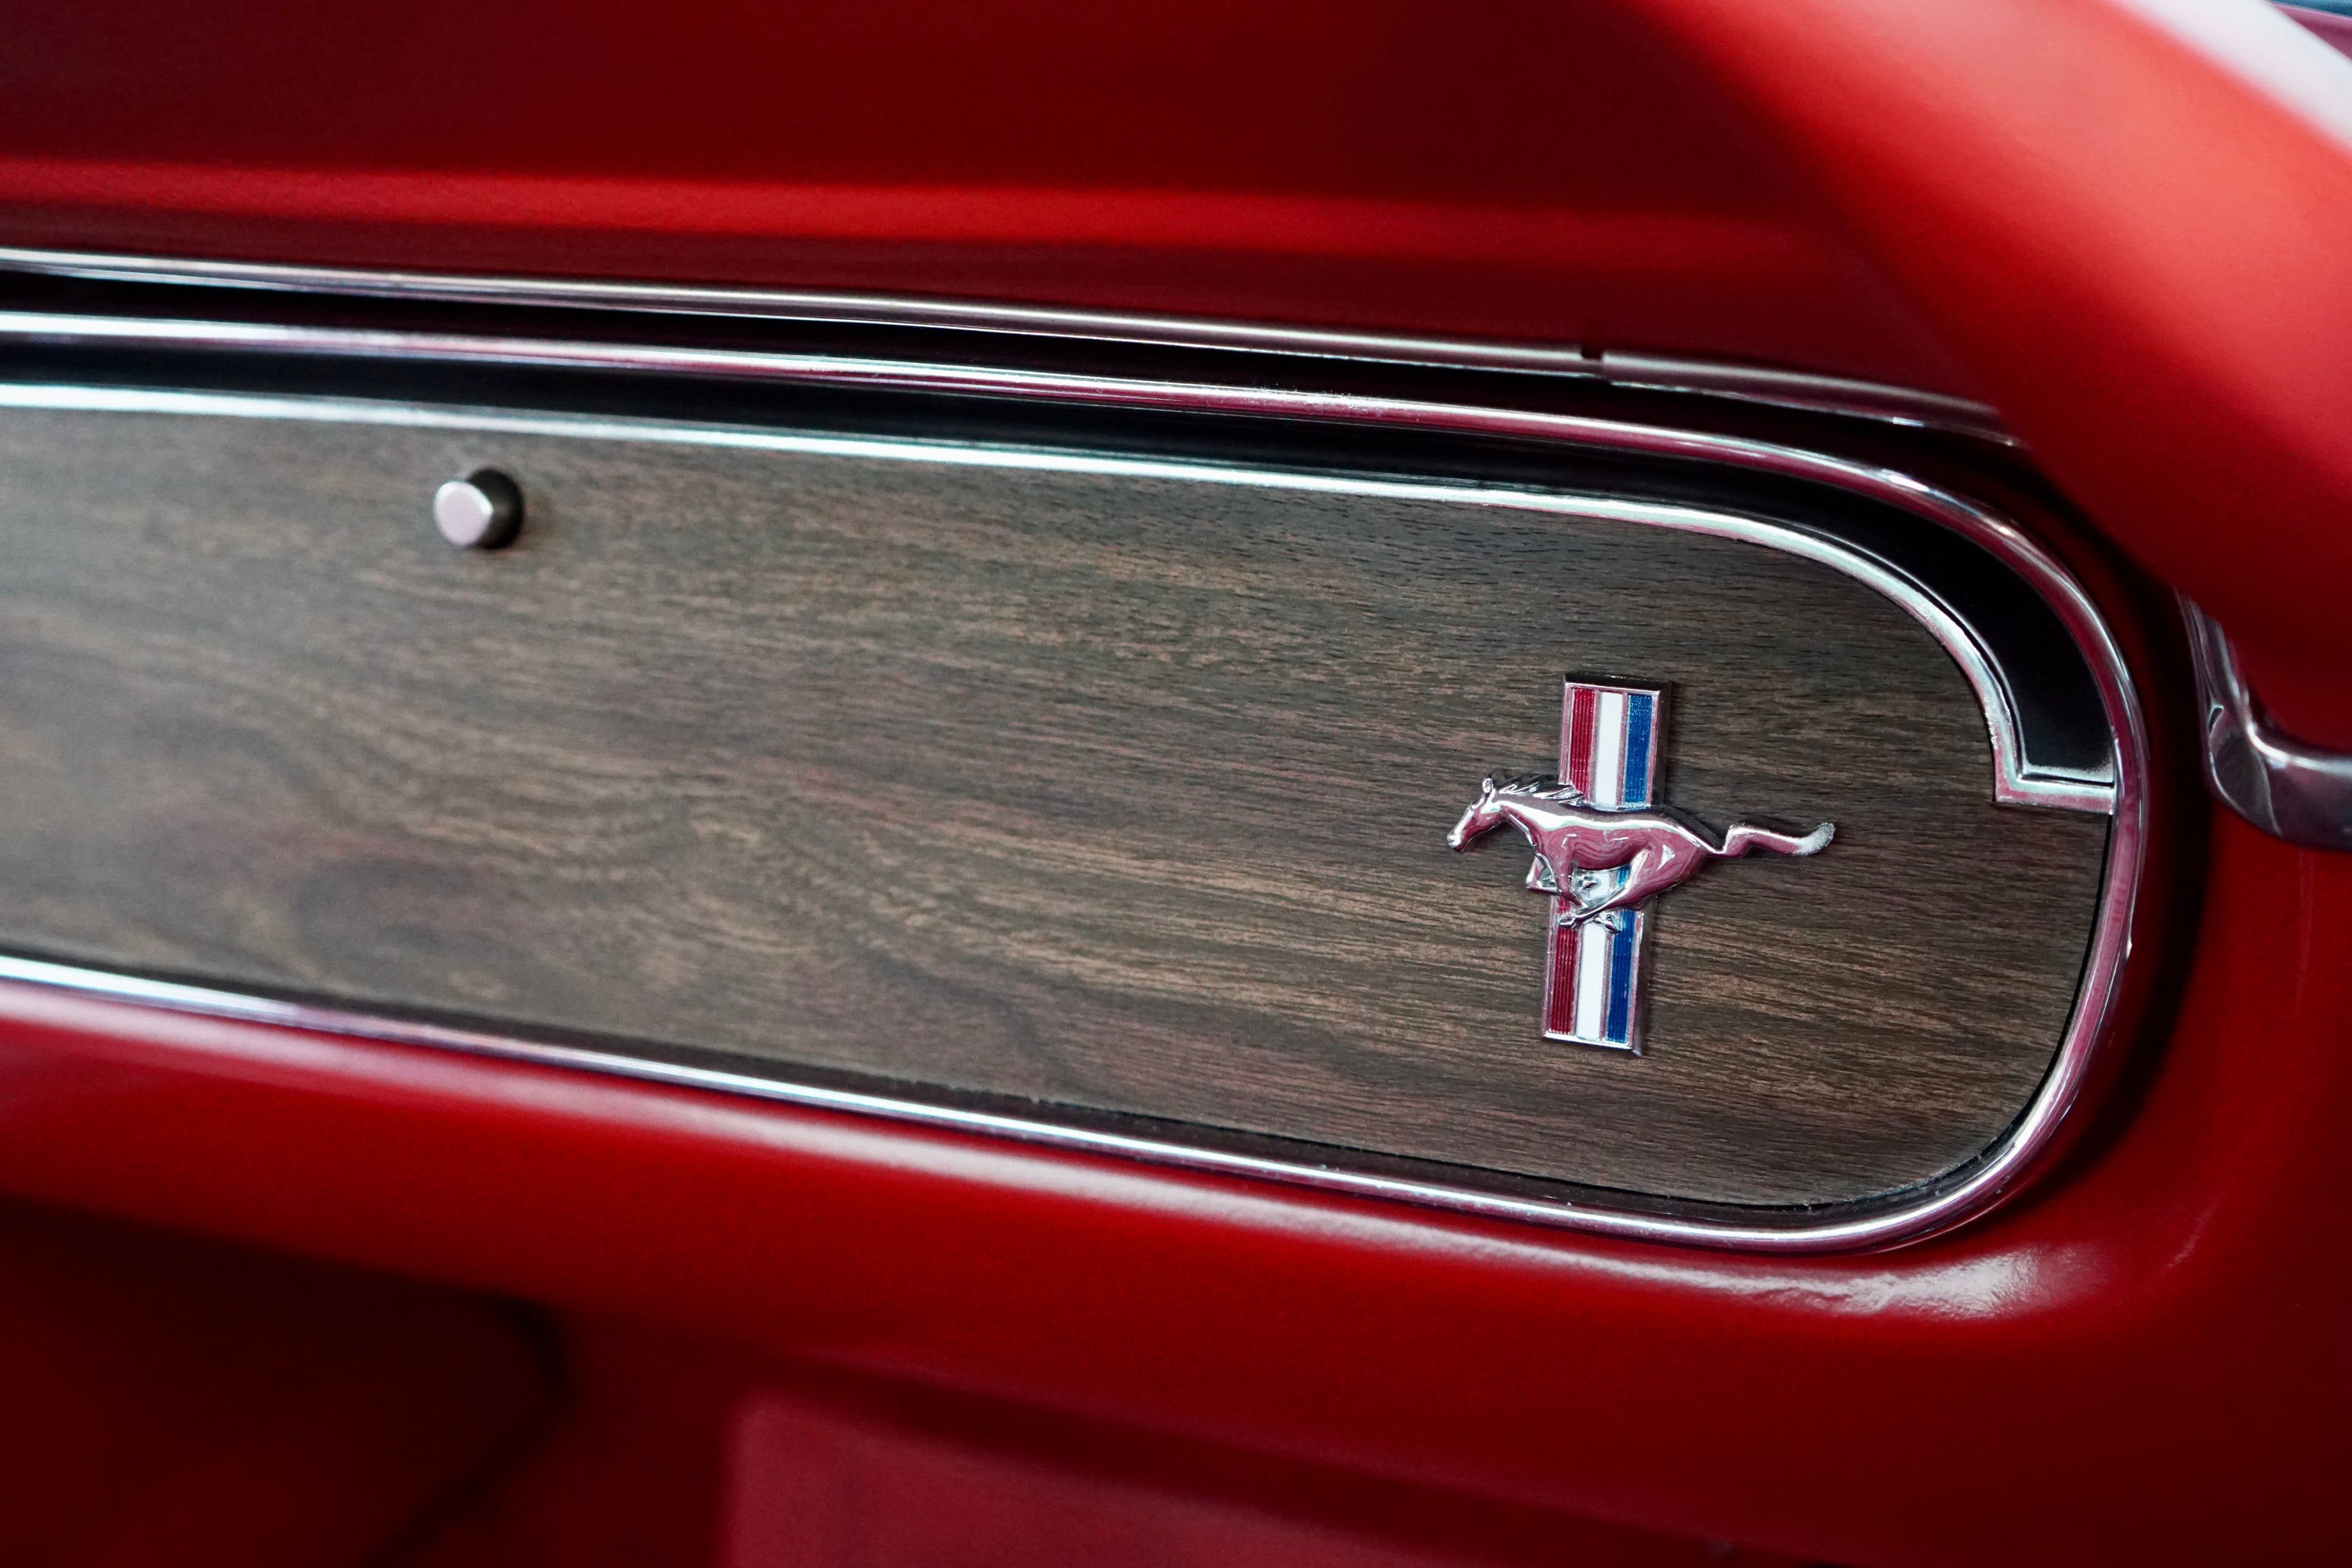 1965 Ford Mustang GT K-Code Fastback FINE ART PRINT